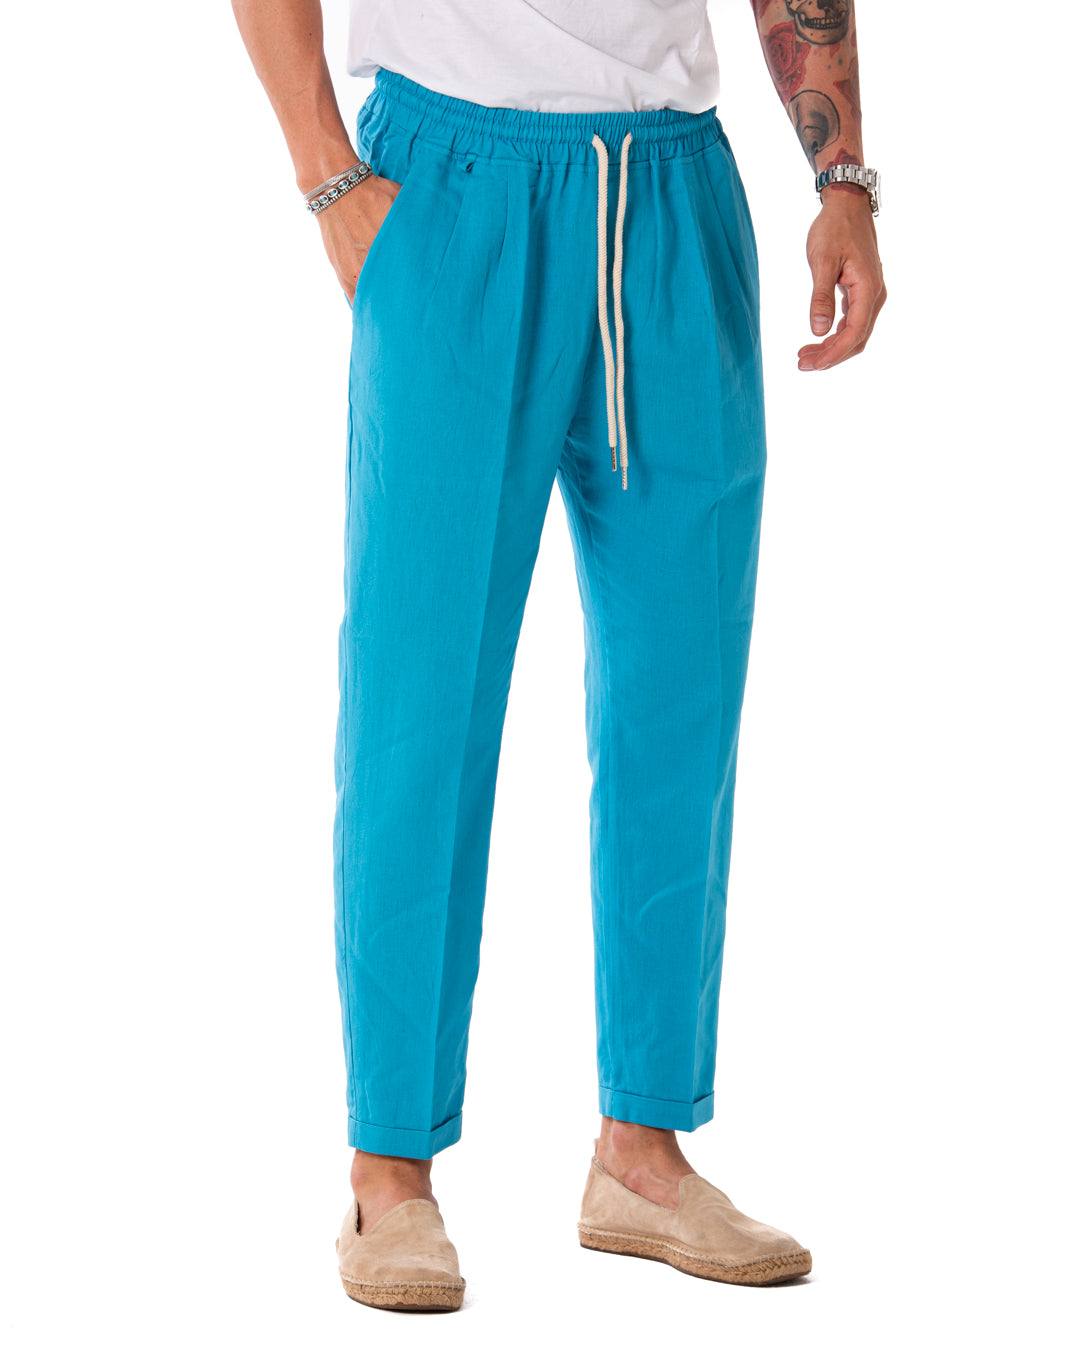 Larry - pantalon en lin turquoise